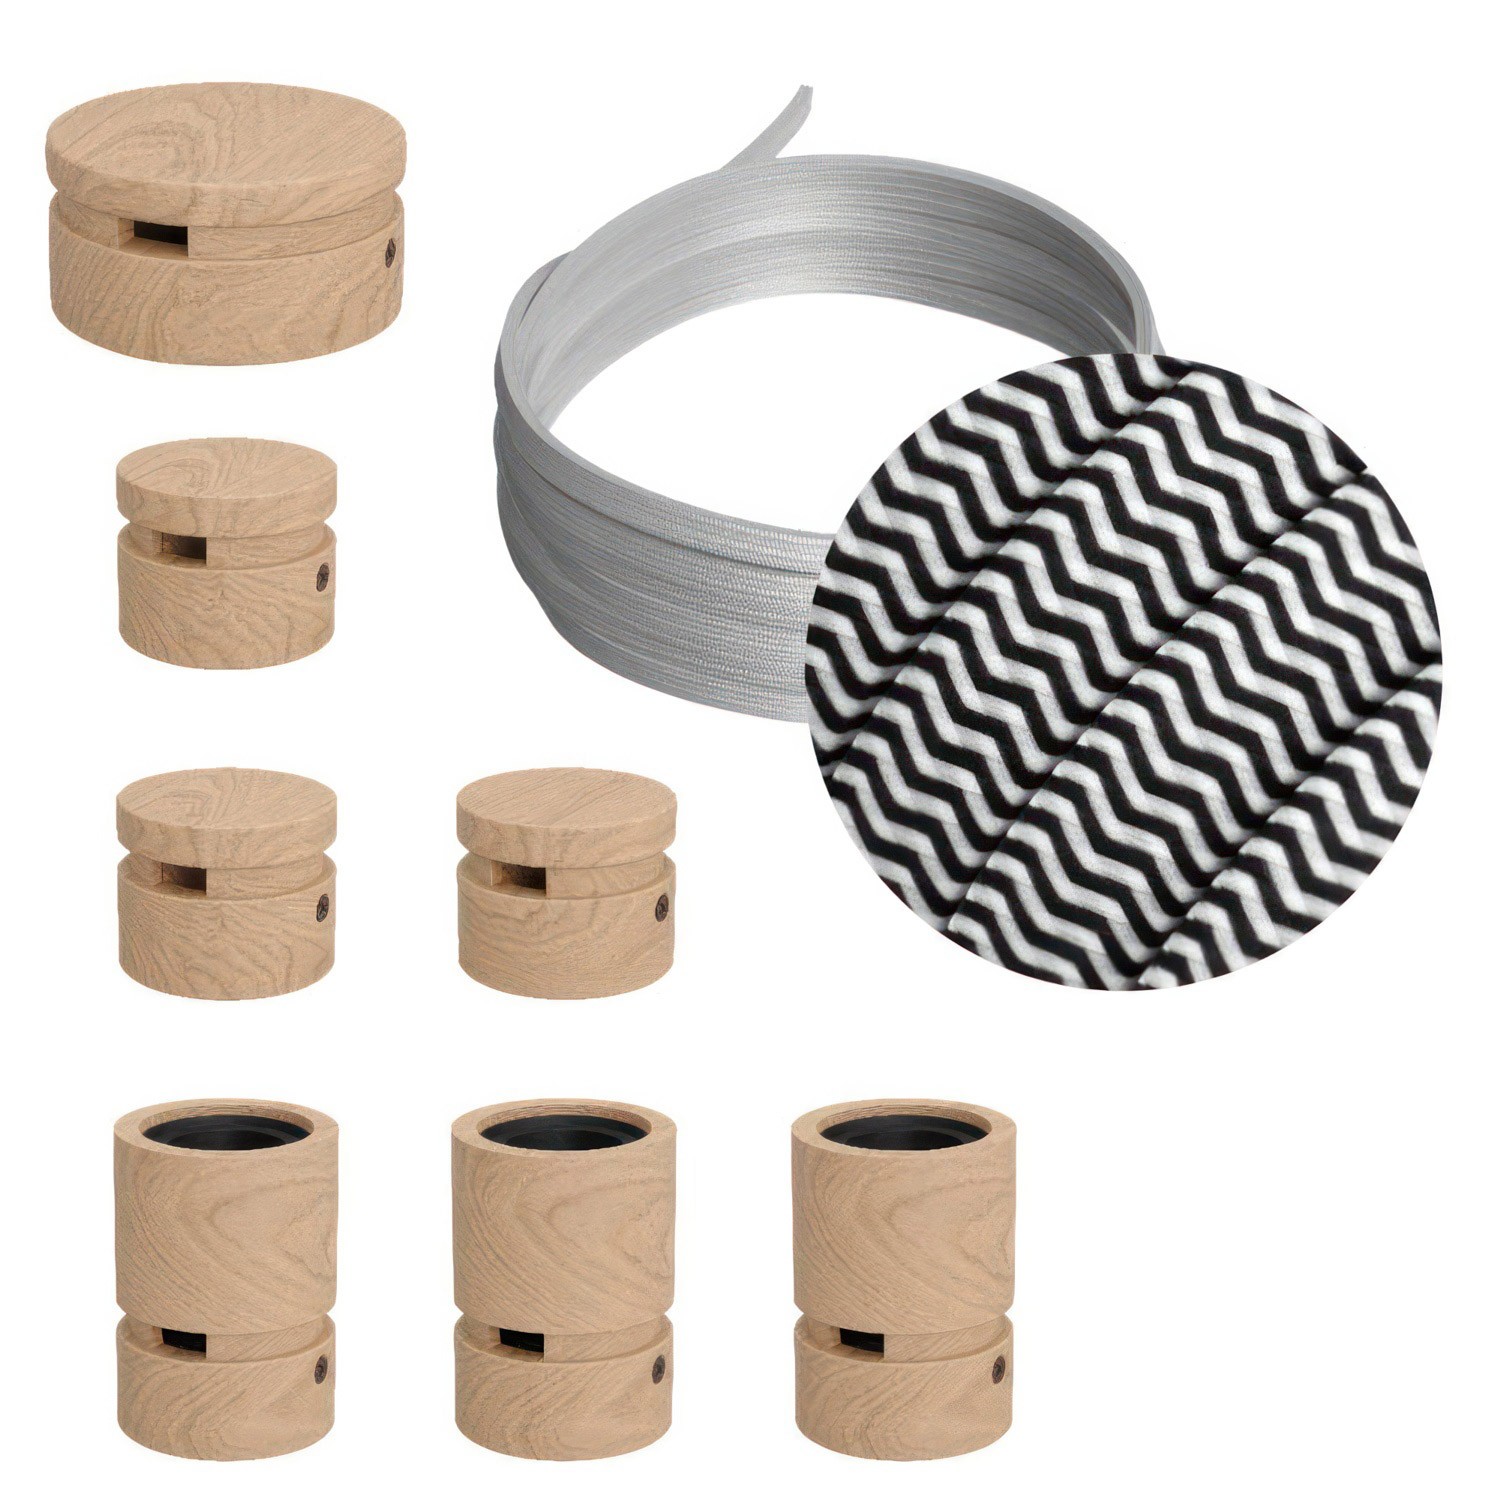 Kit "Linear" Filé System - con 5m cable textil guirnalda y 7 accesorios de madera